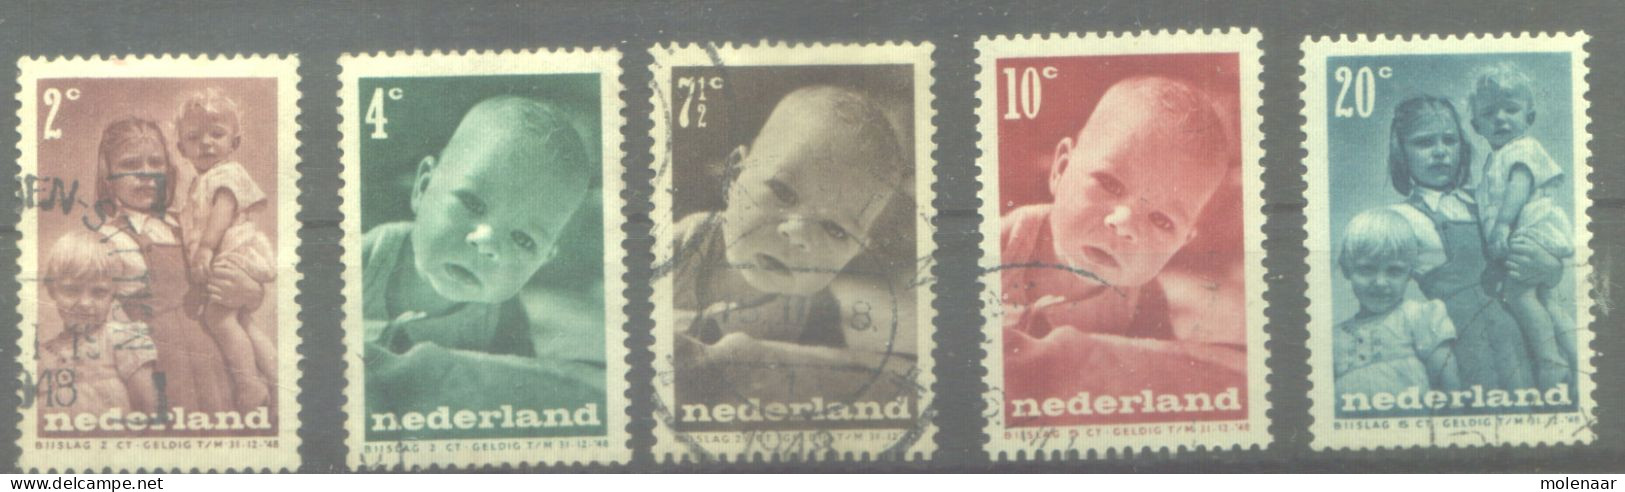 Postzegels > Europa > Nederland > Periode 1891-1948 (Wilhelmina) > 1930-48 > Gebruikt No. 495-499 (11844) - Oblitérés